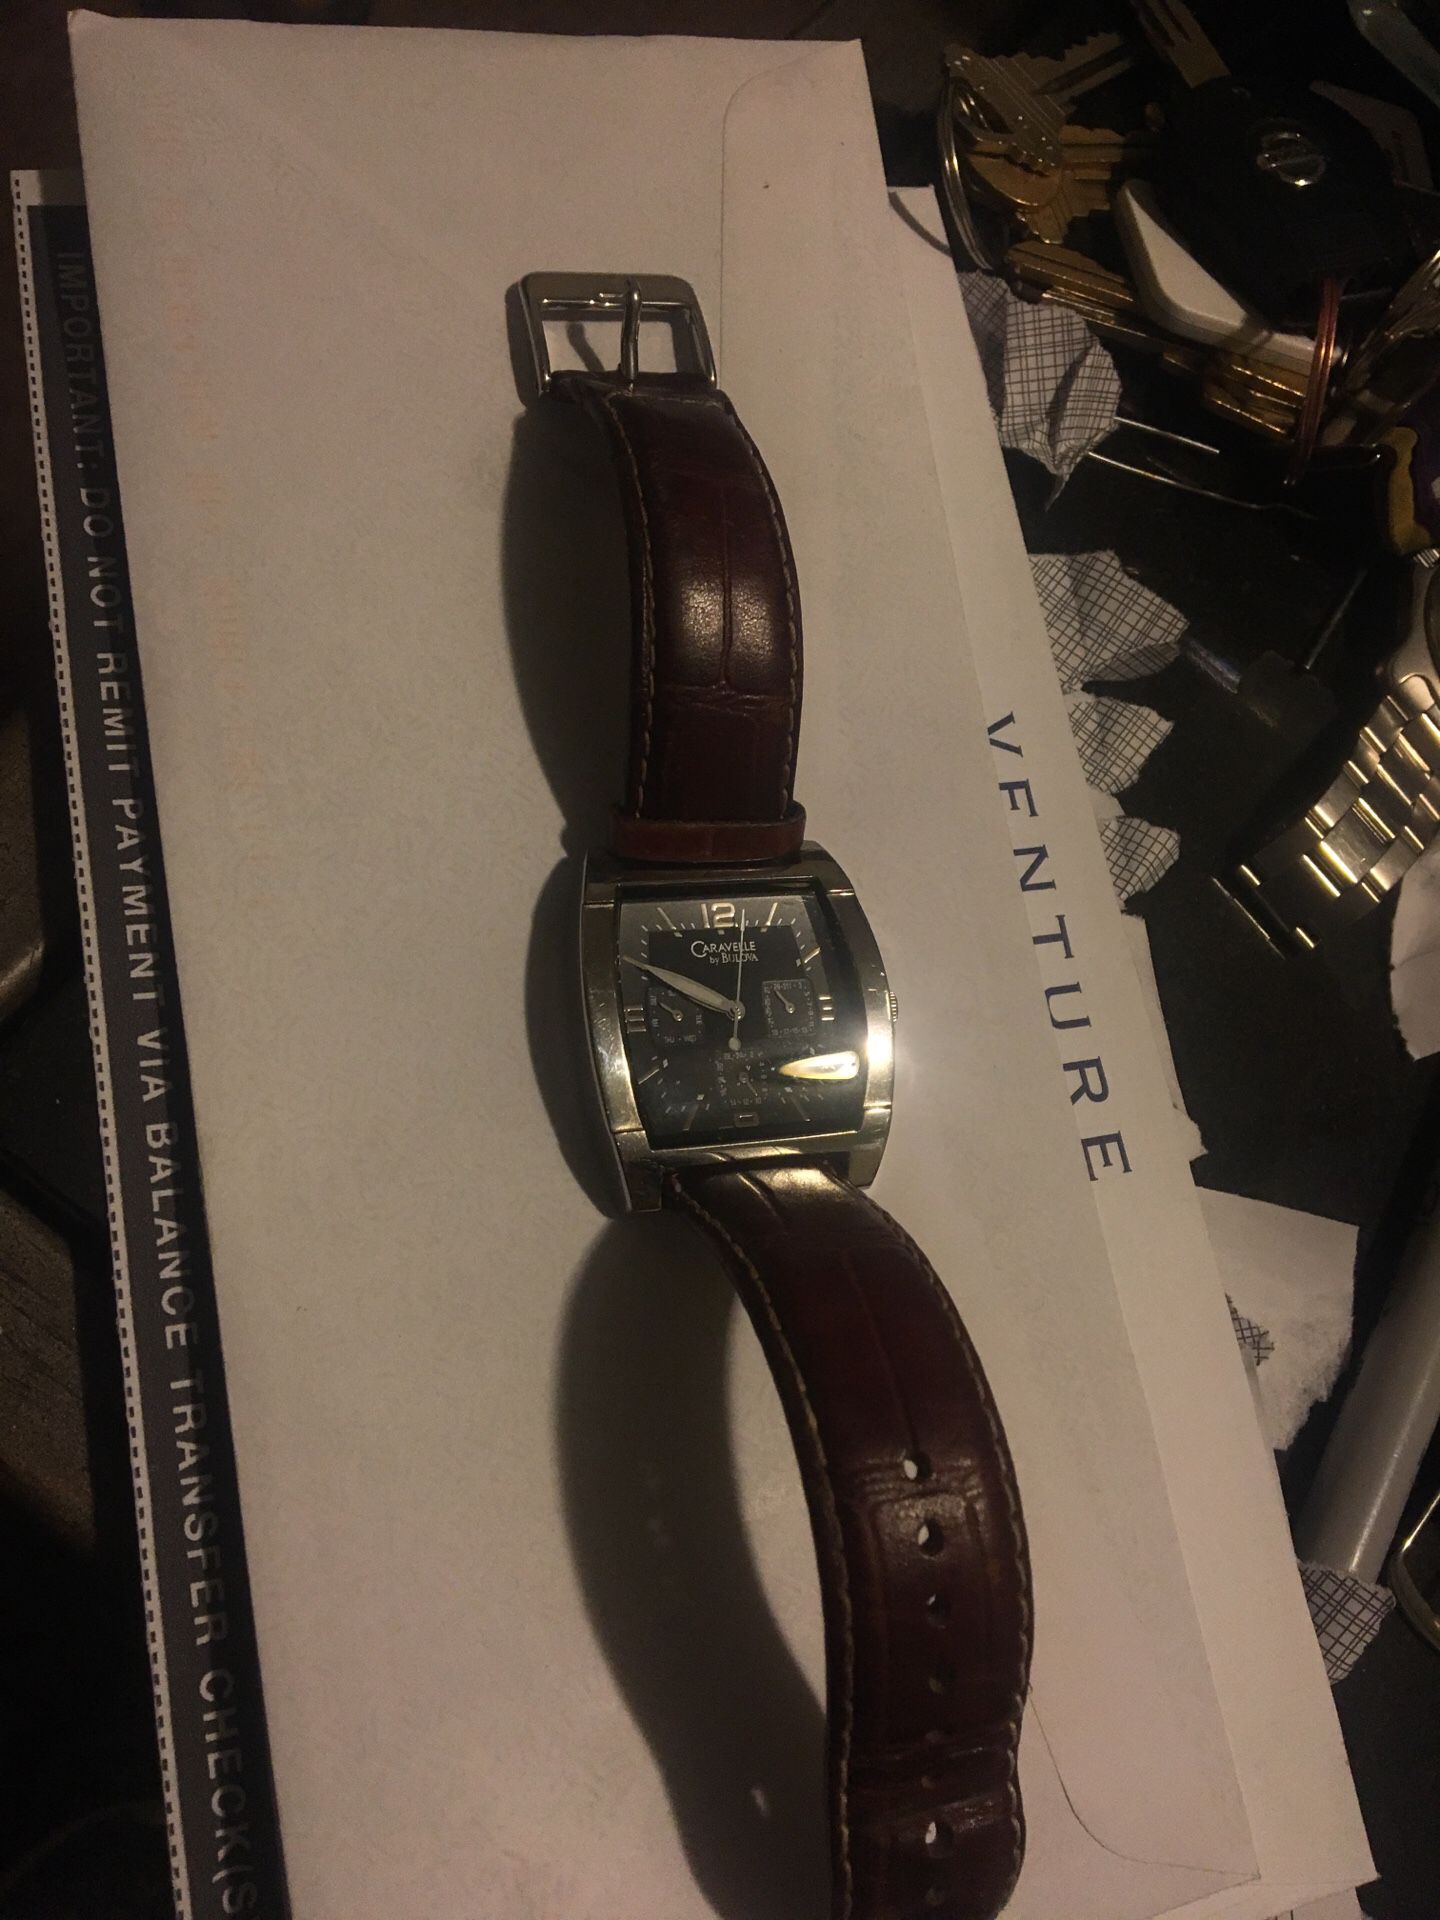 Louis Vuitton watch for Sale in Waukegan, IL - OfferUp